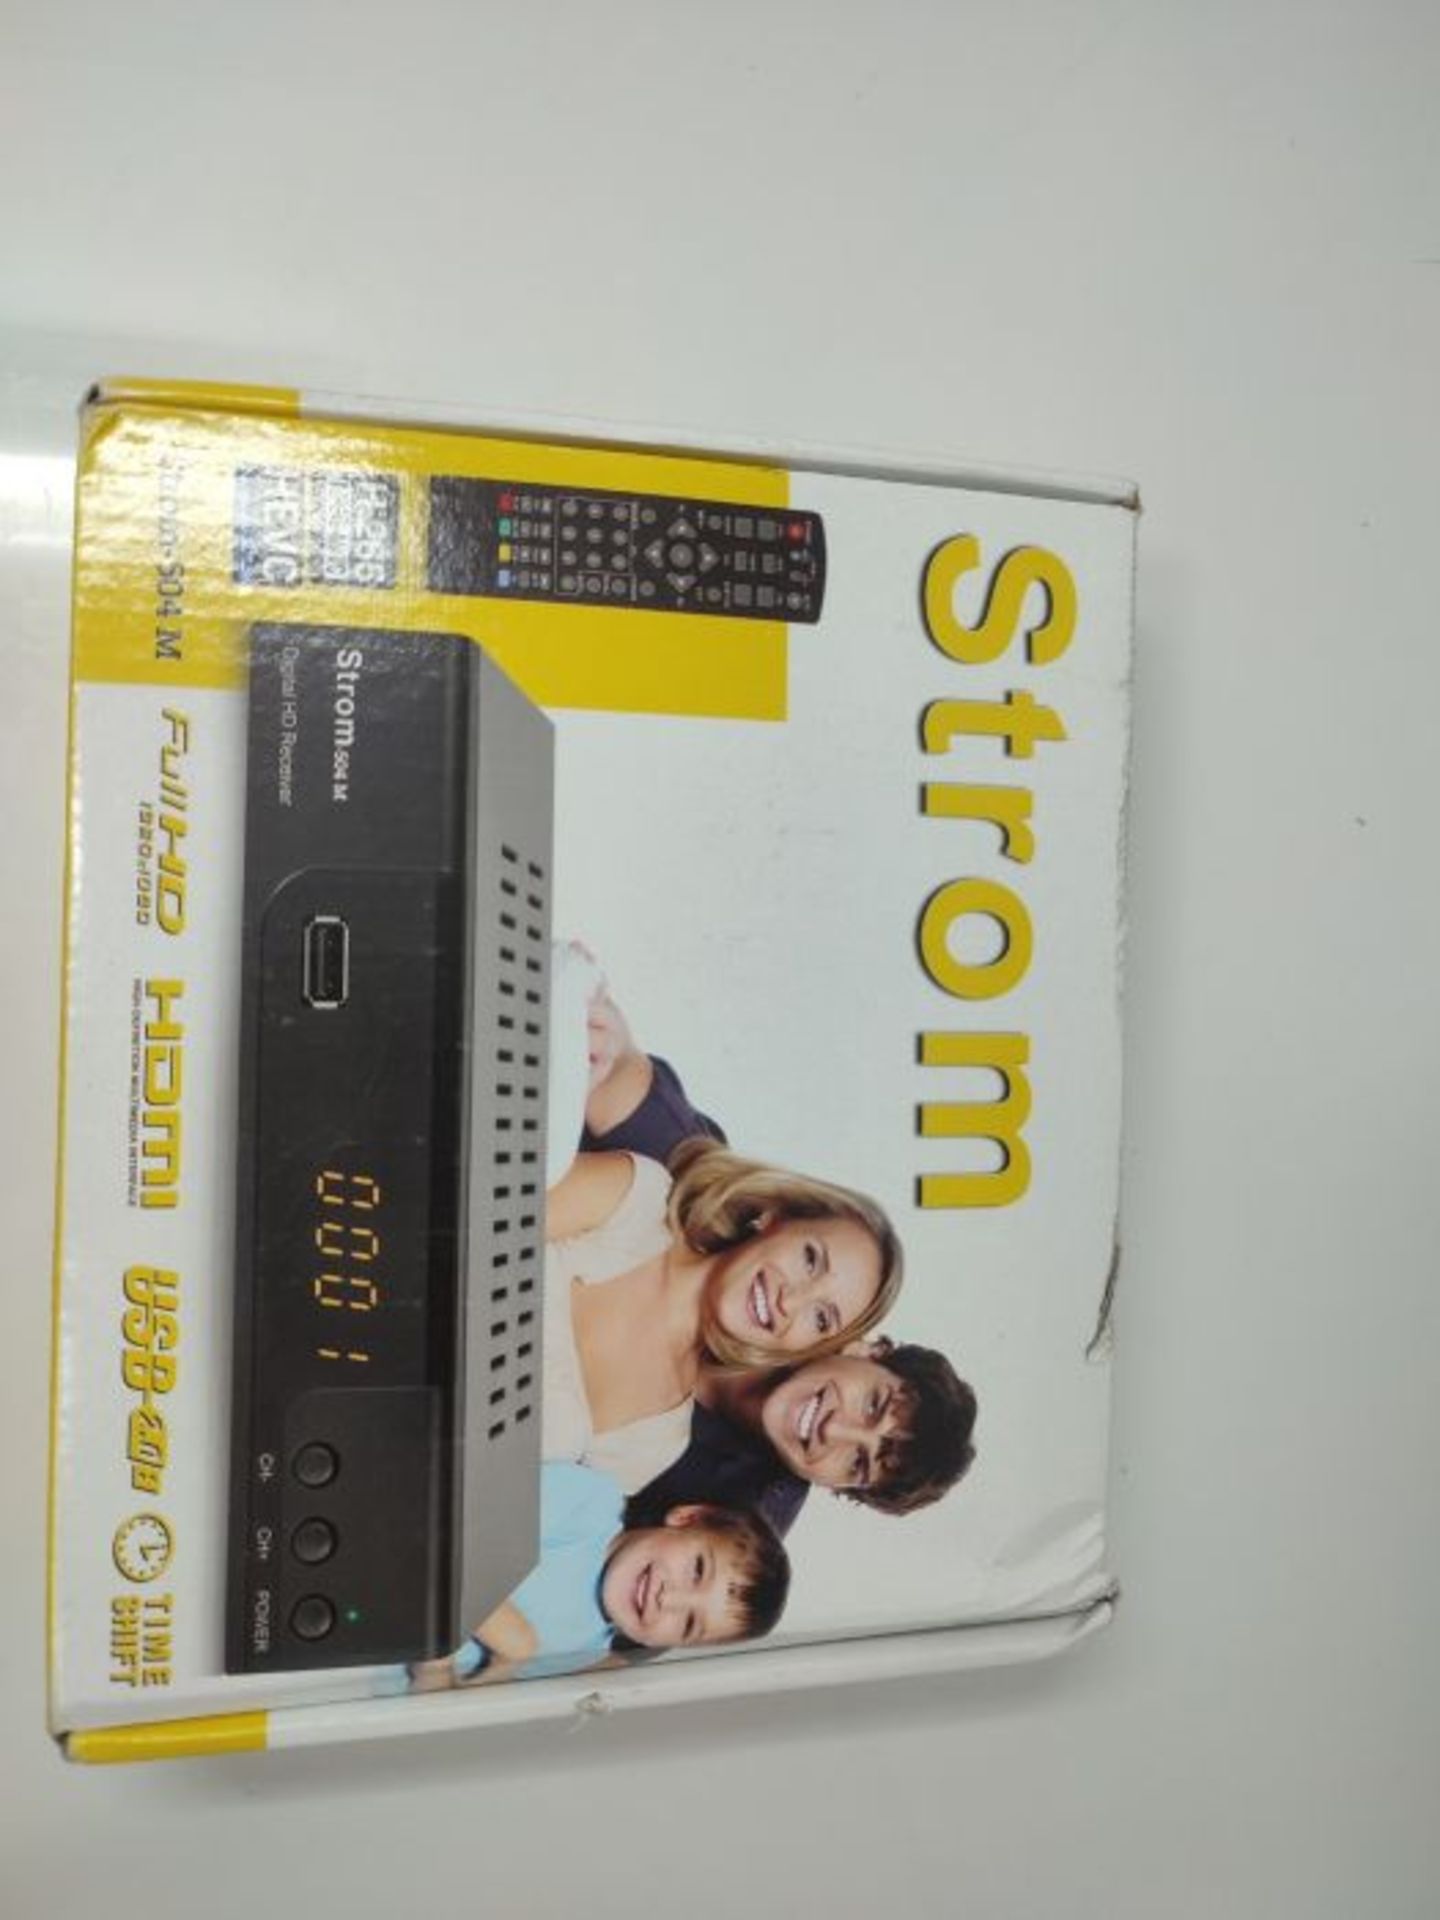 STROM 504 - Decoder TNT Full HD DVB-T2, compatibile con HEVC264 (HDMI, Scart, USB, Dig - Image 2 of 3